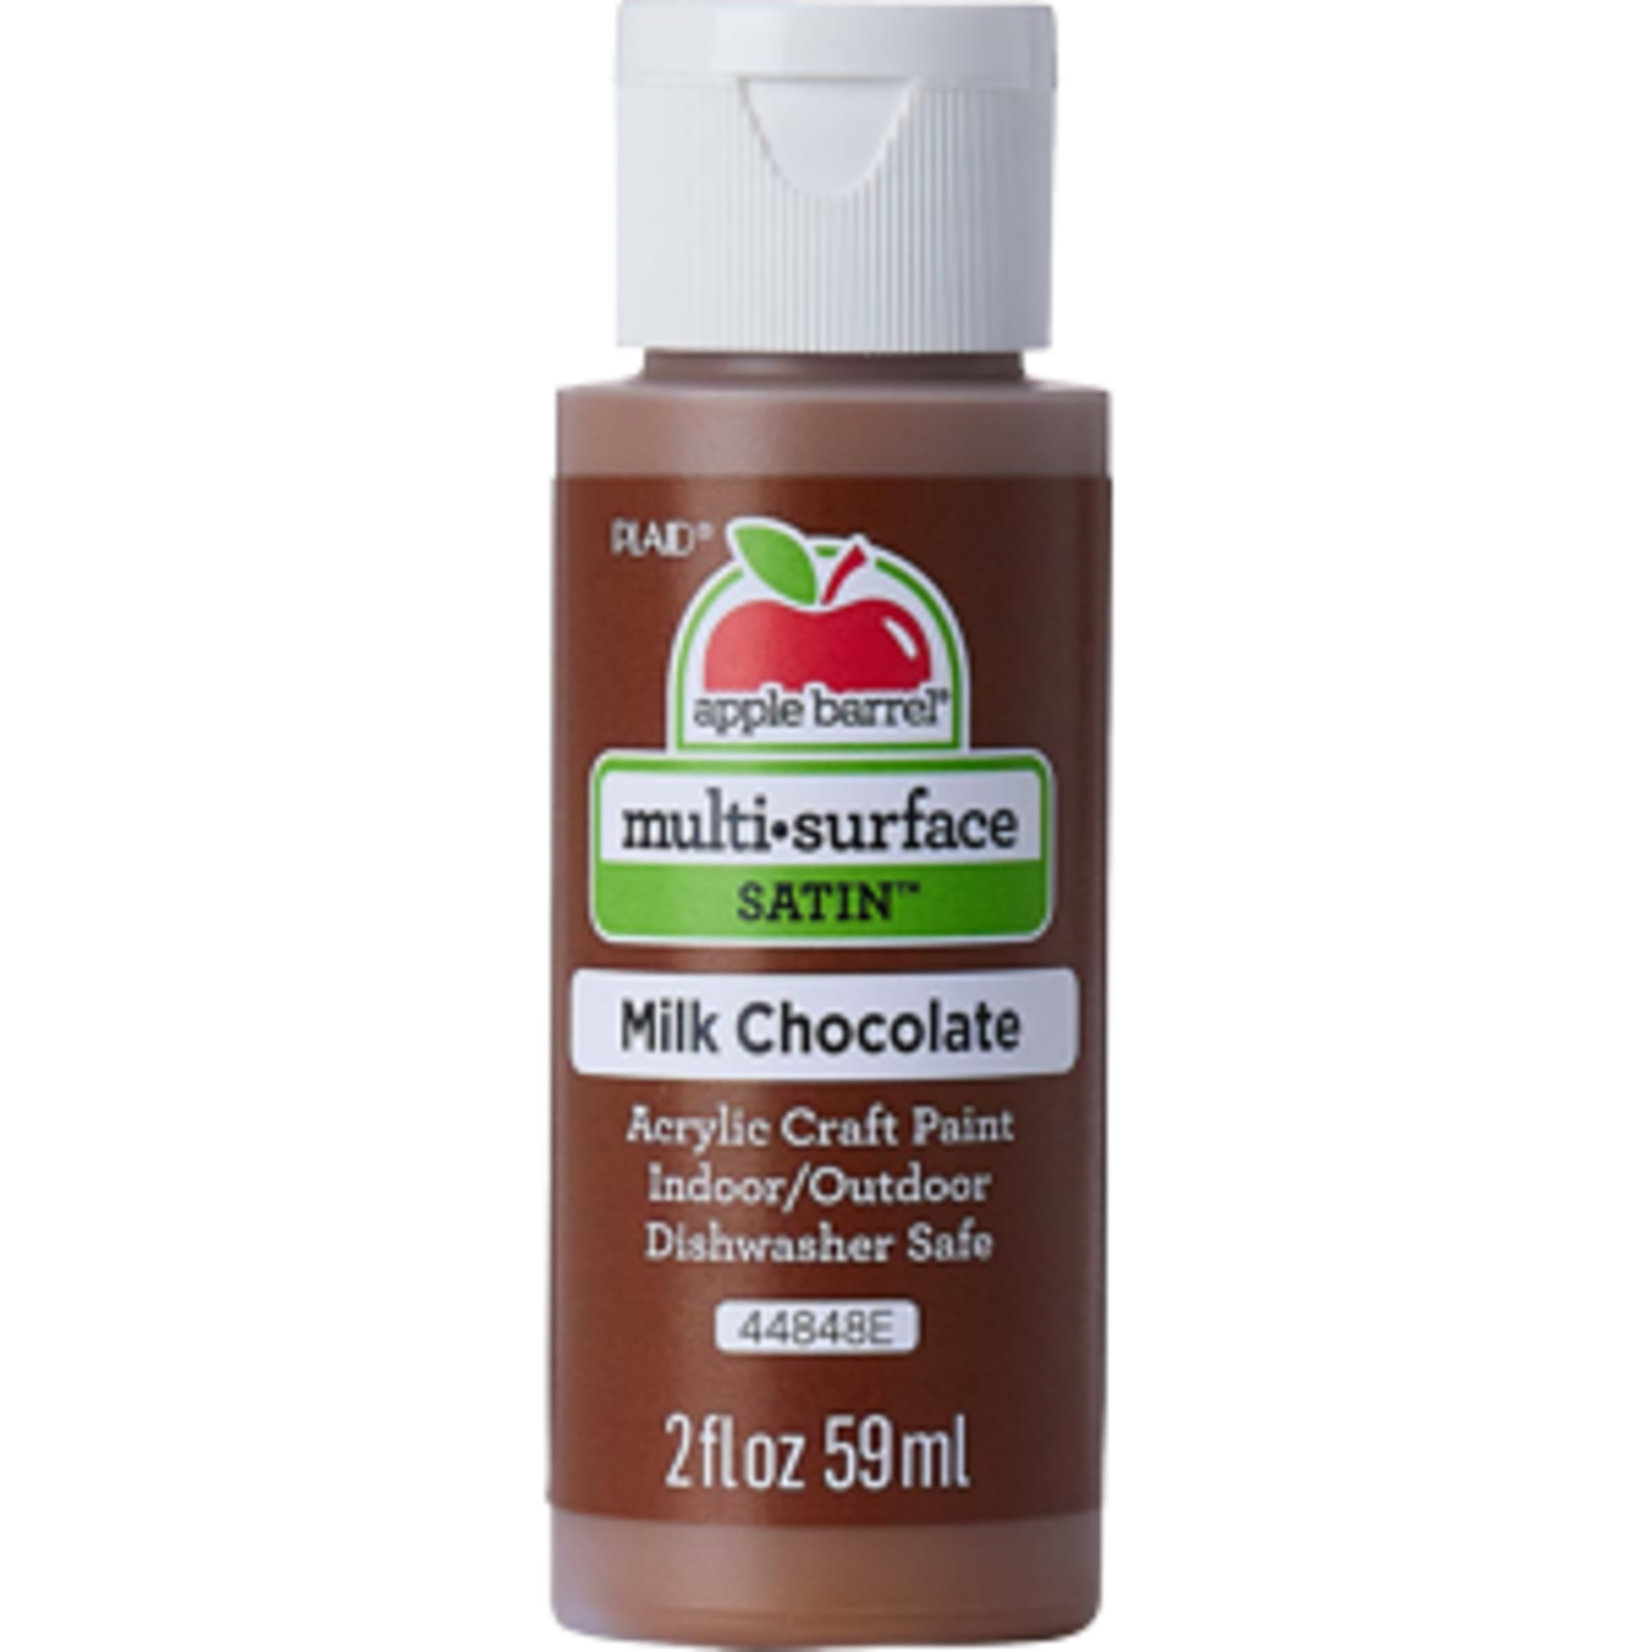 Apple Barrel Apple Barrel  Multi-Surface Satin - Milk Chocolate, 2 fl oz